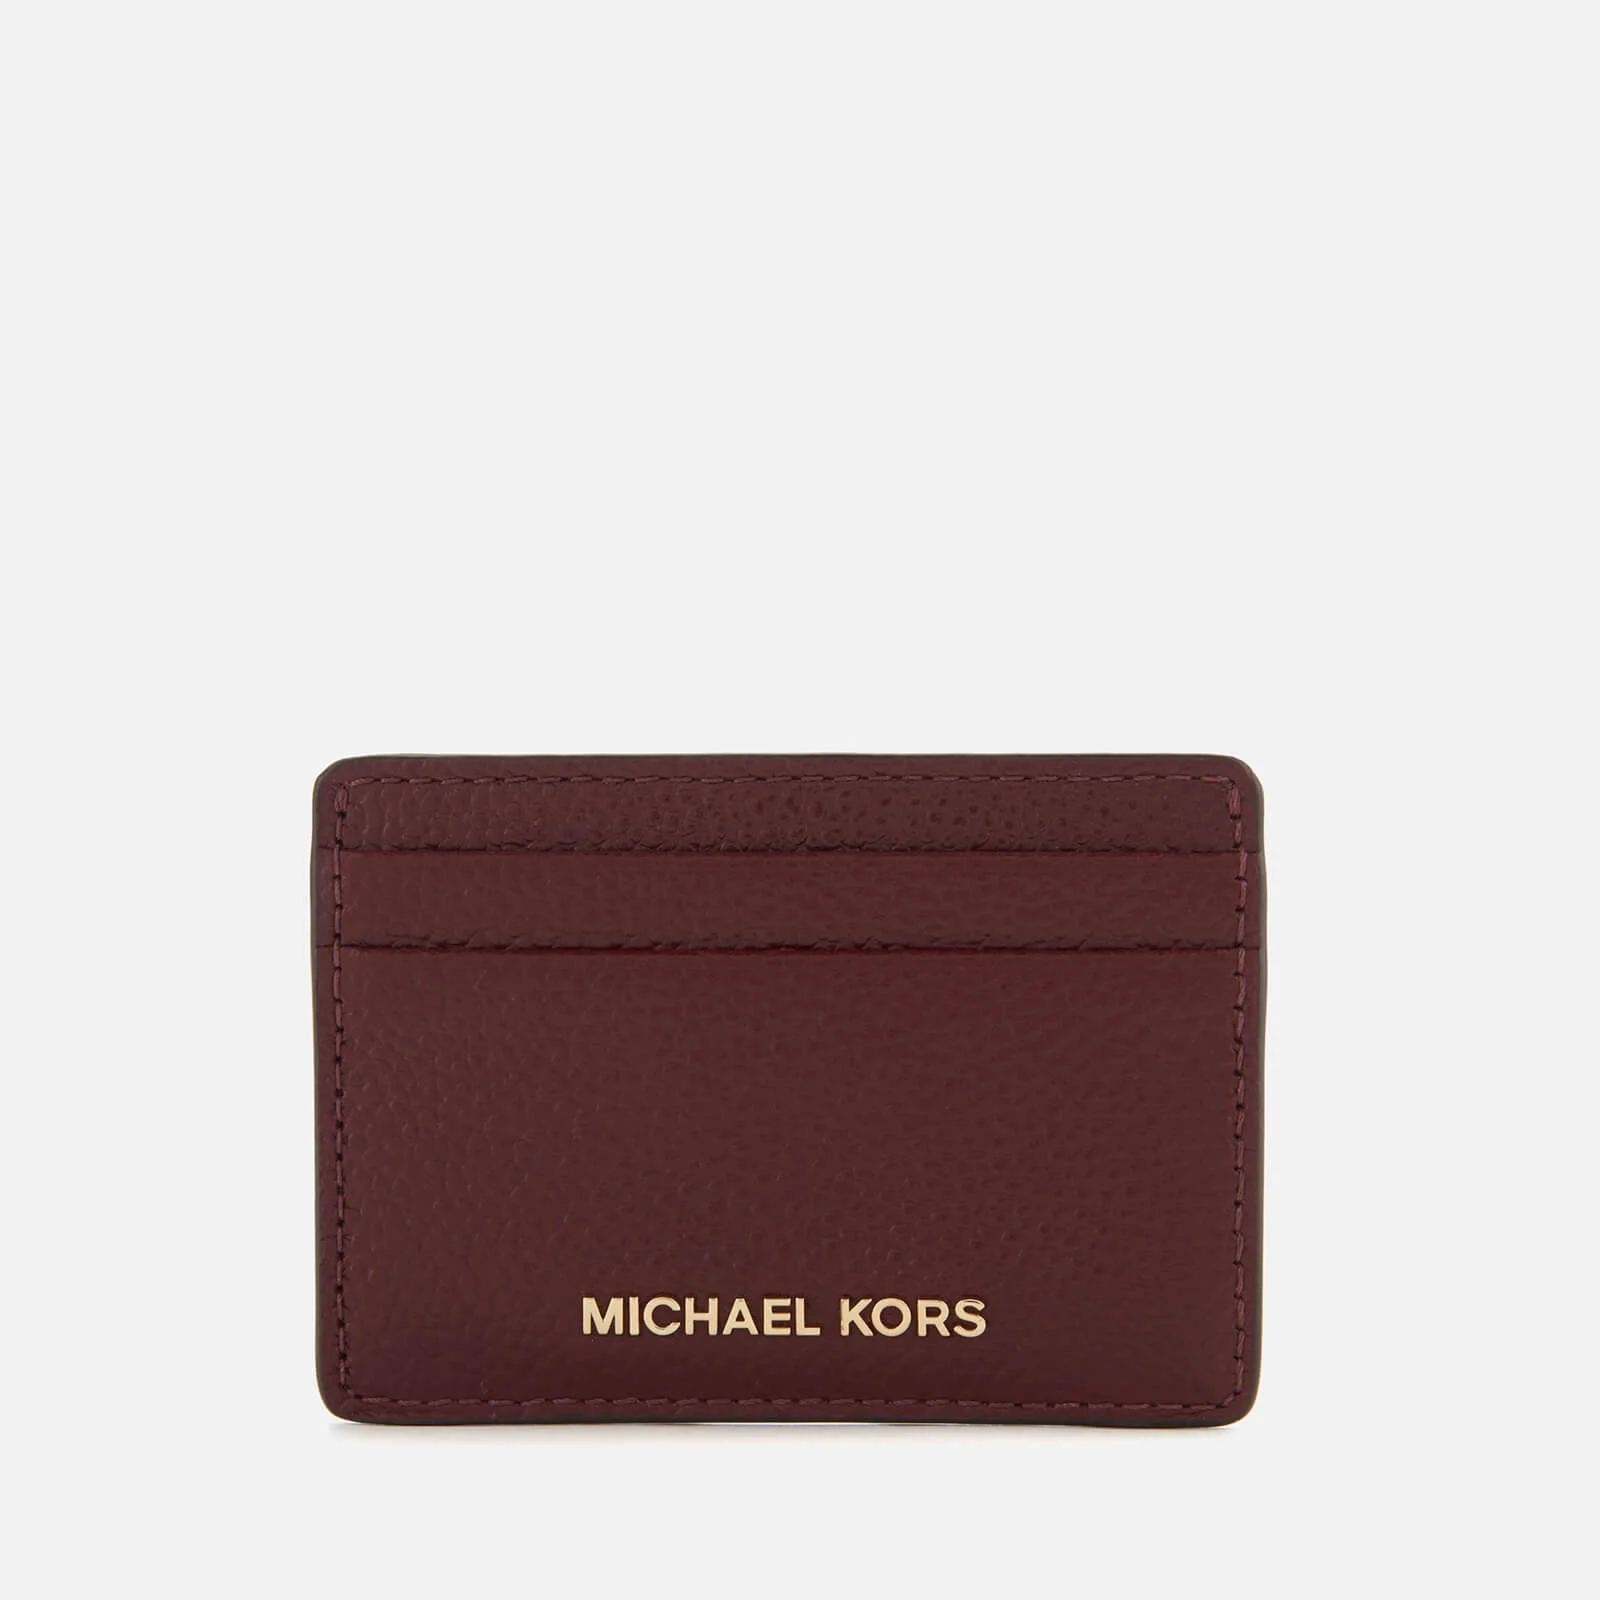 MICHAEL MICHAEL KORS Women's Money Pieces Card Holder - Oxblood Image 1